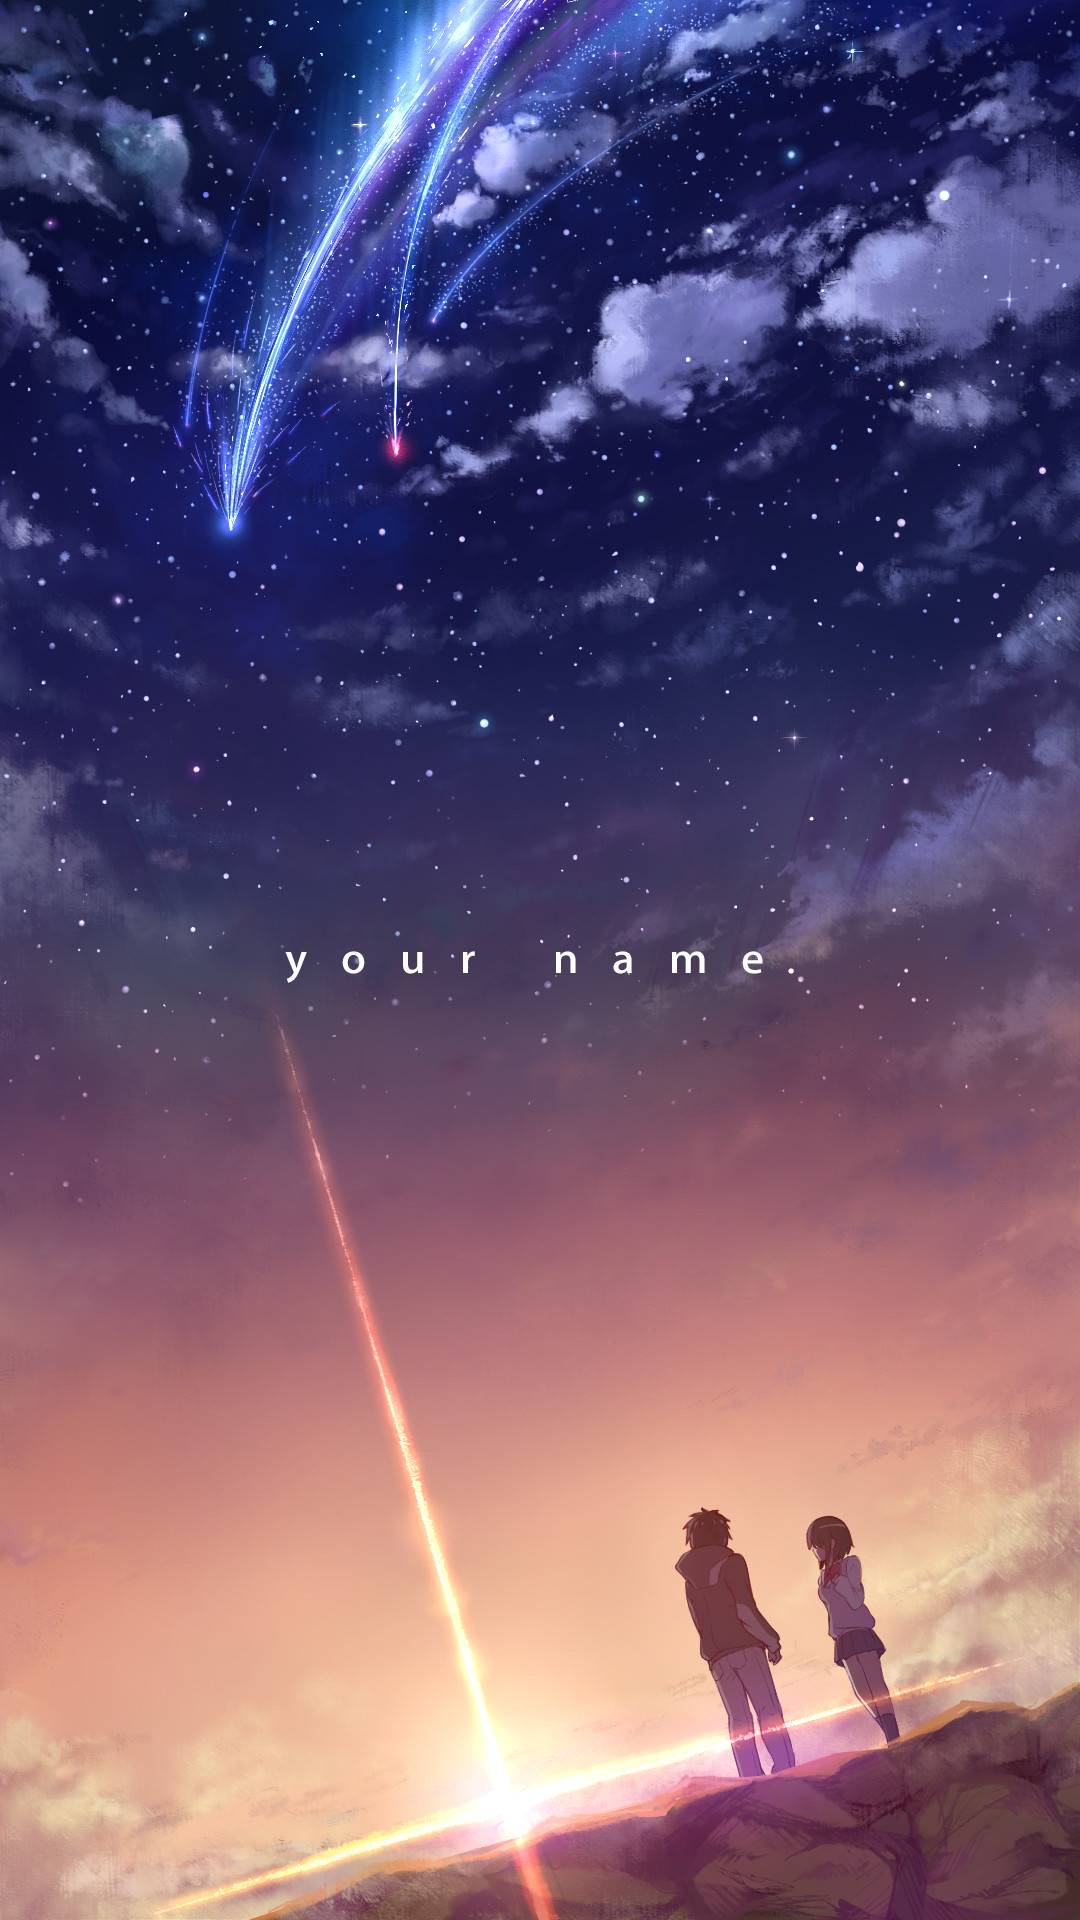 Your Name Anime Wallpaper Free Your Name Anime